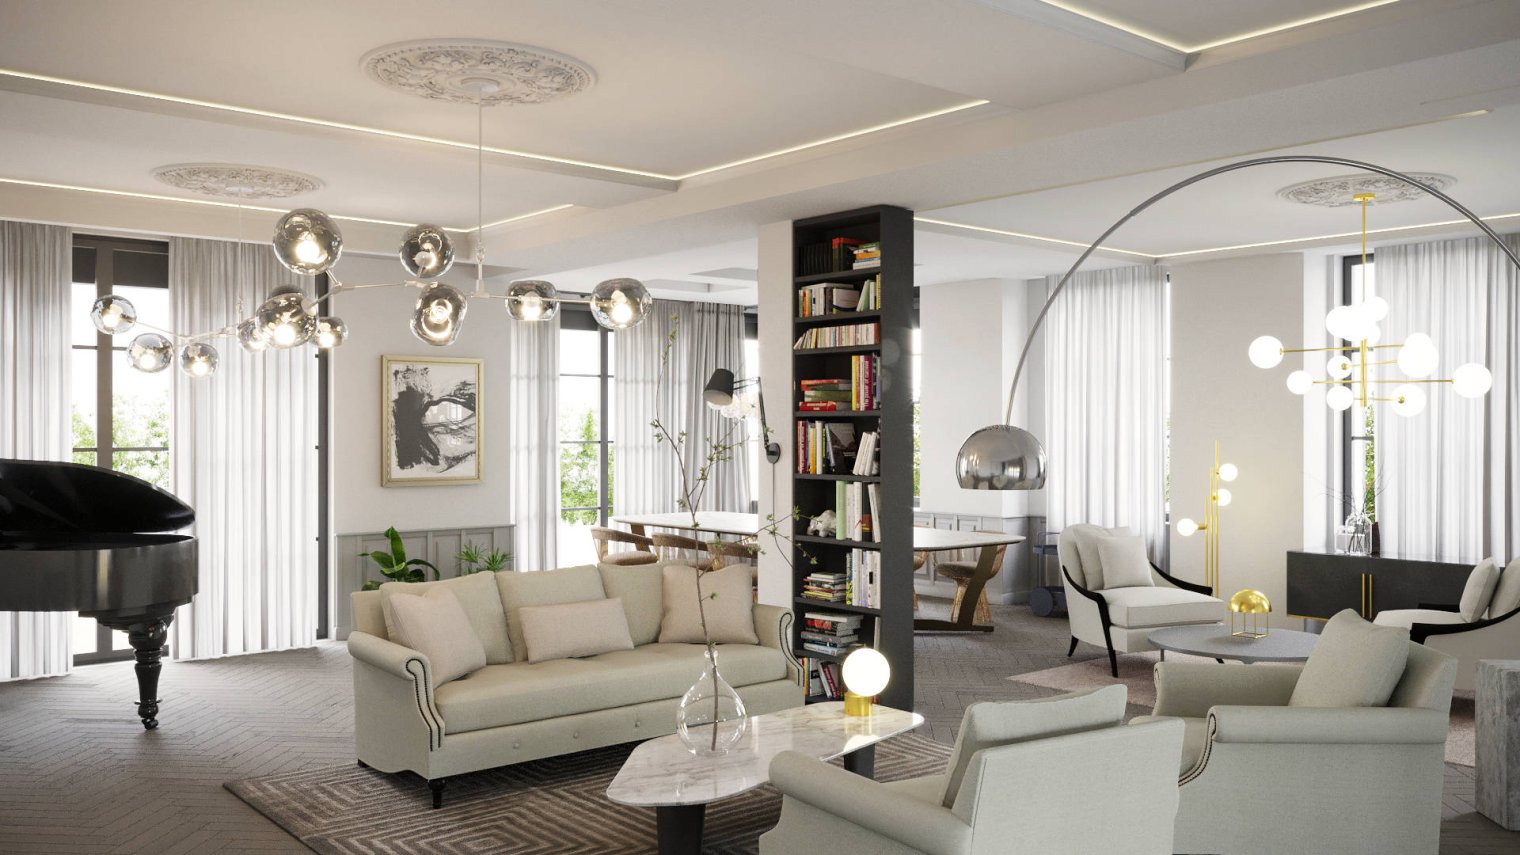 Luxury apartment creative interior visualization I made in Cinema 4D